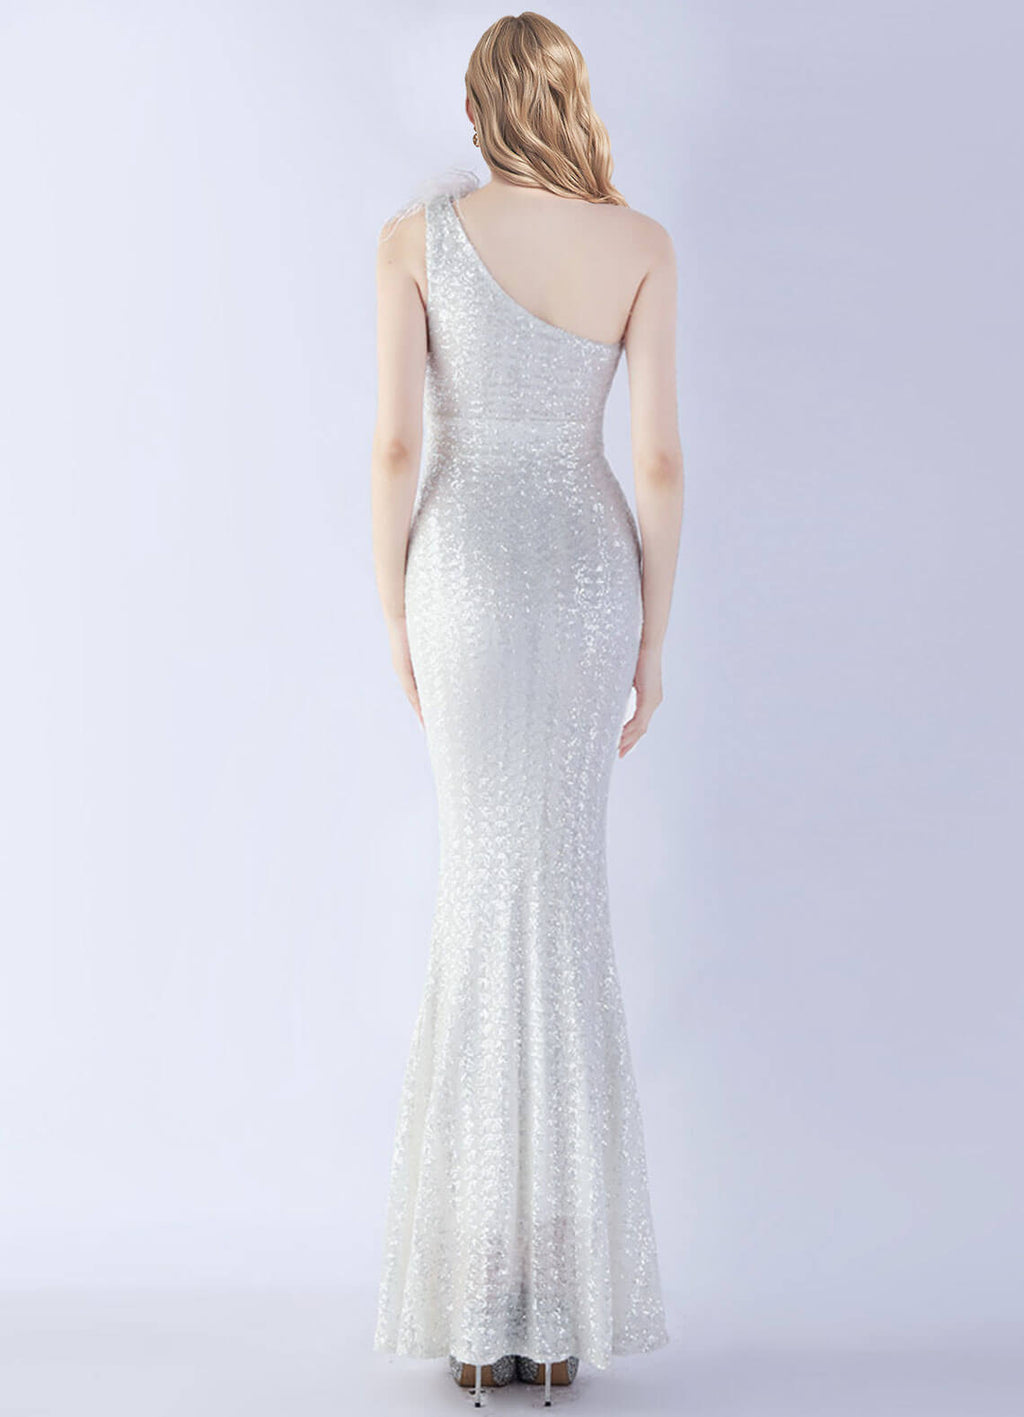 NZ Bridal White Mermaid Maxi Sequin Prom Dress 31359 Ruby a